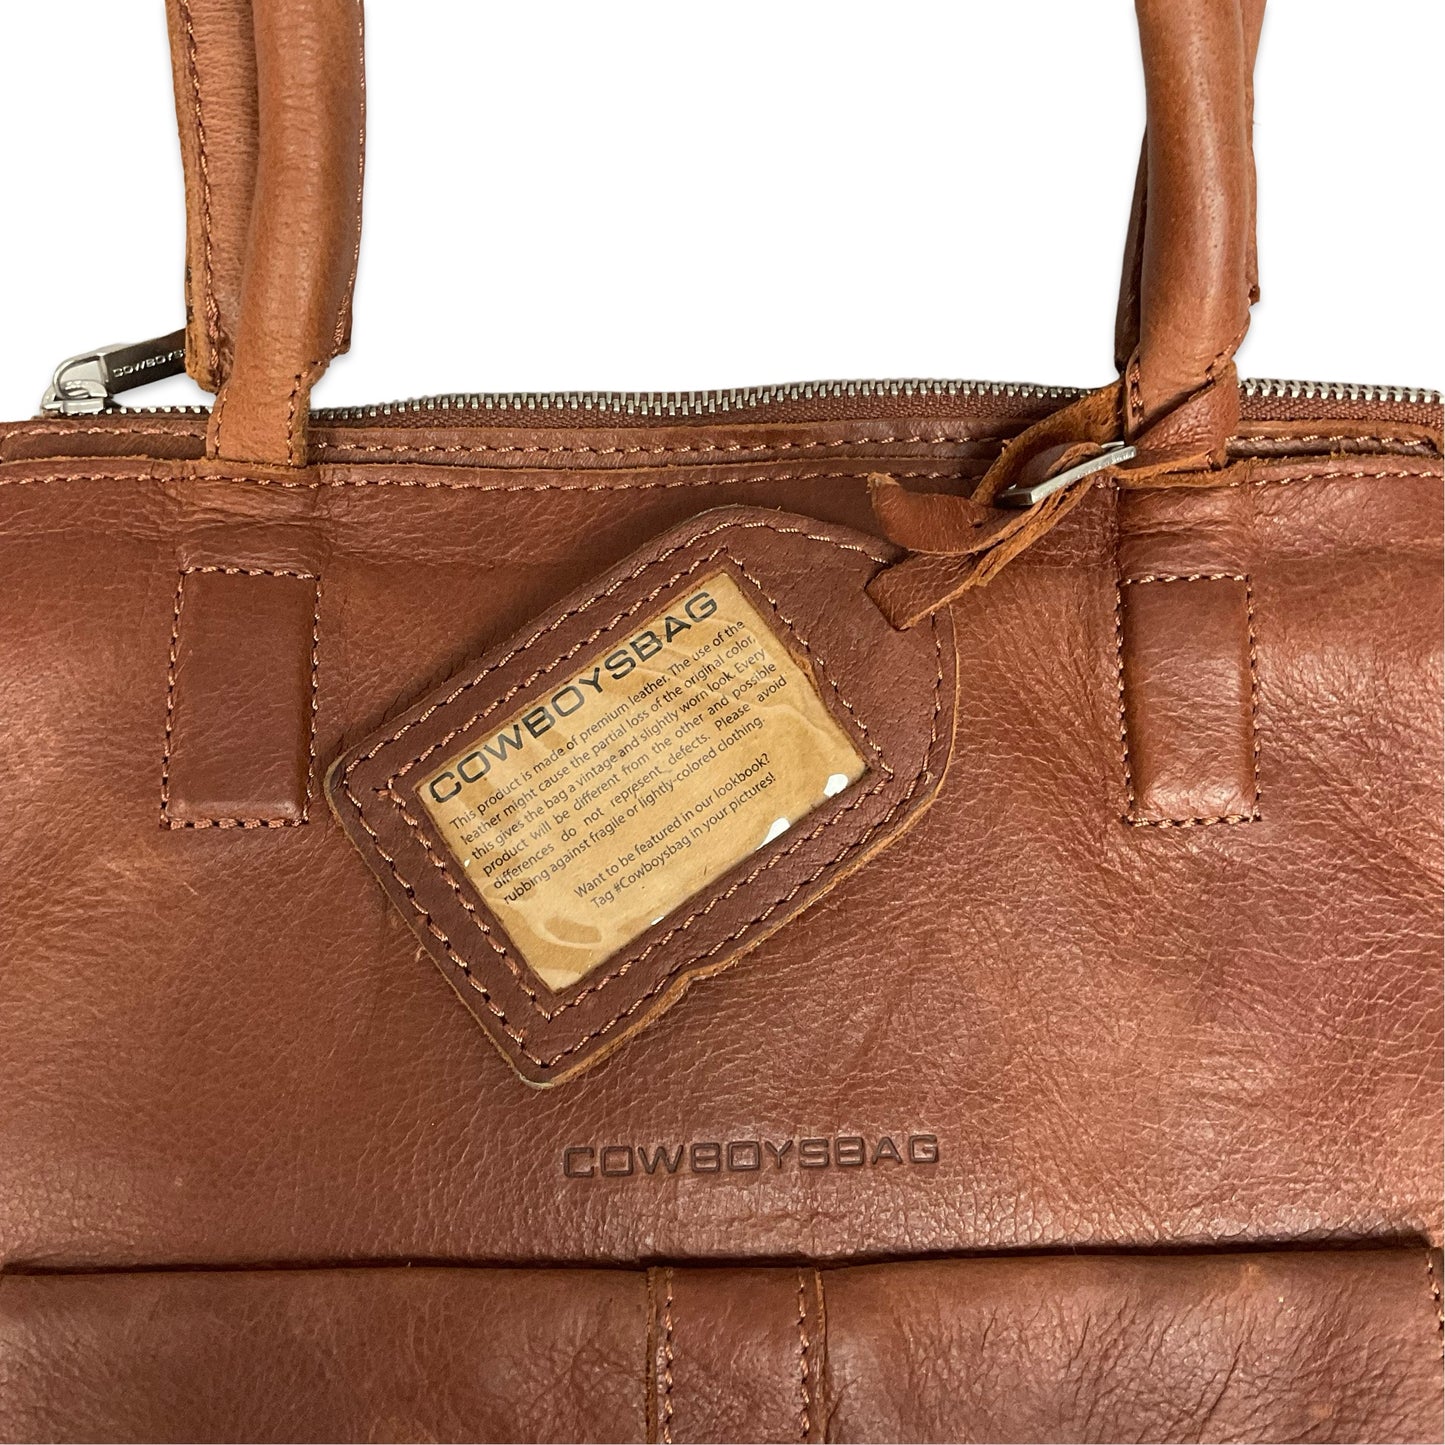 Vintage Brown Leather Handbag